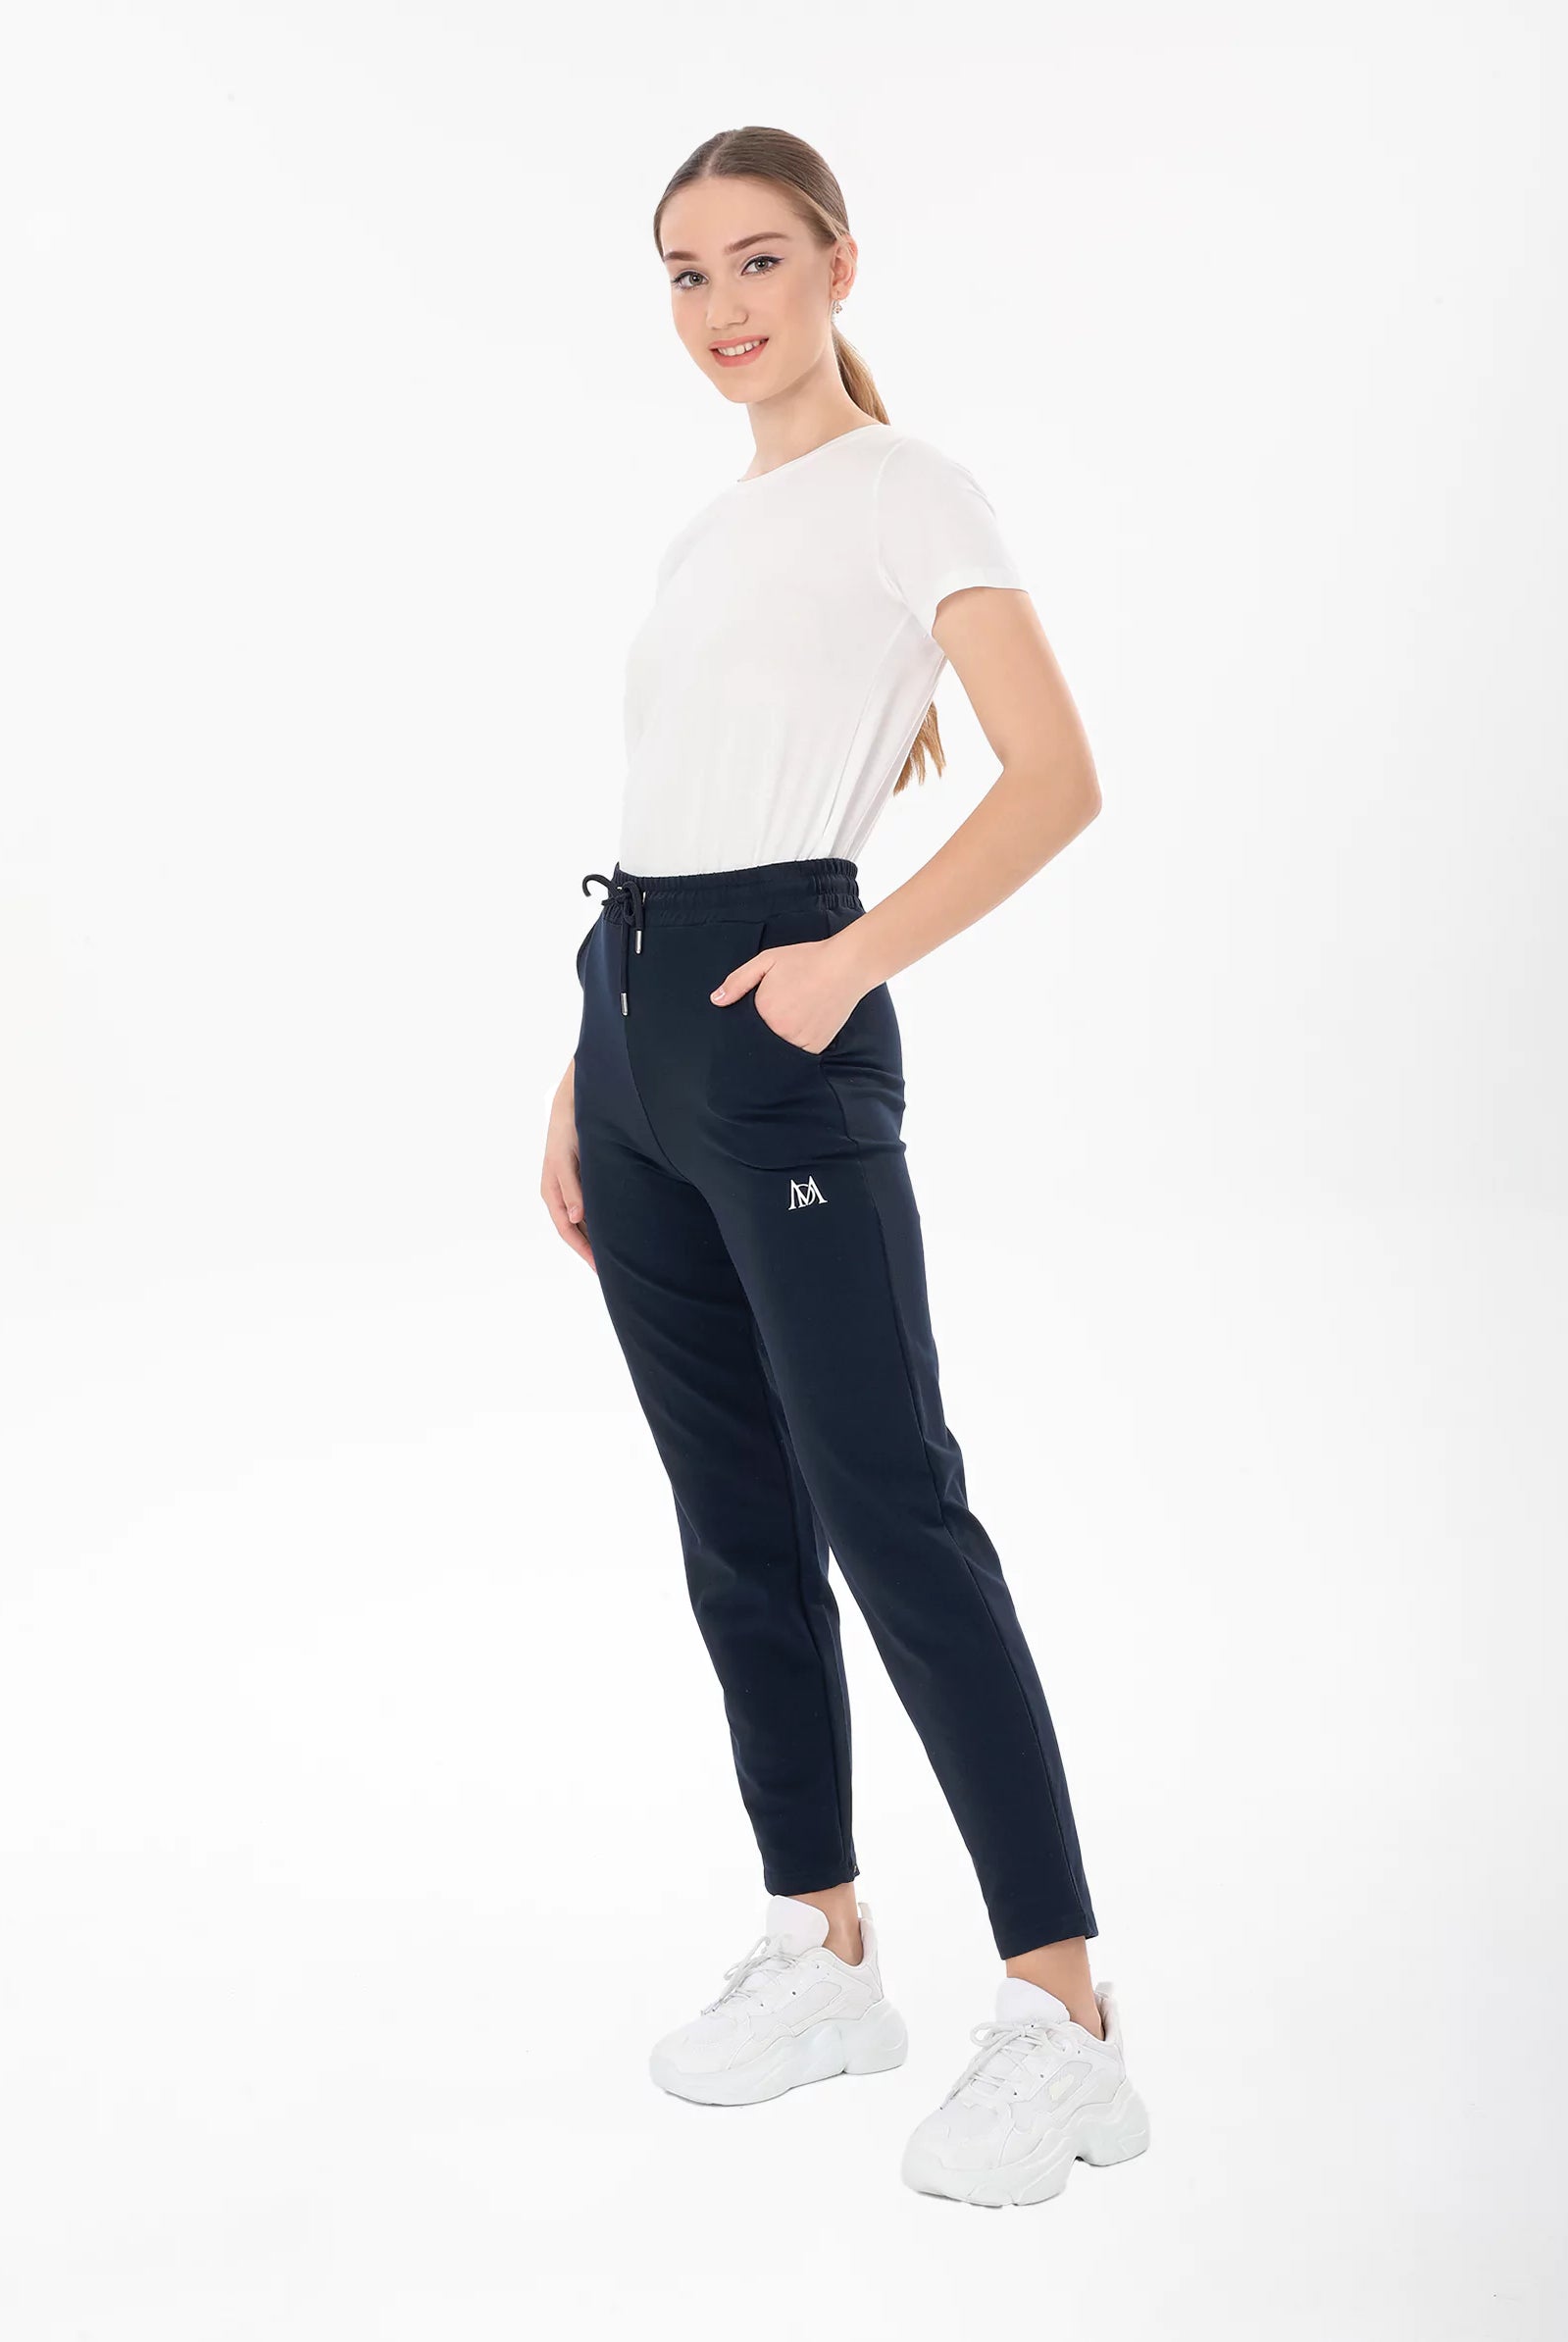 Buy Black Sweatpants Women UK, Women Sweatpants in Black – Modora UK